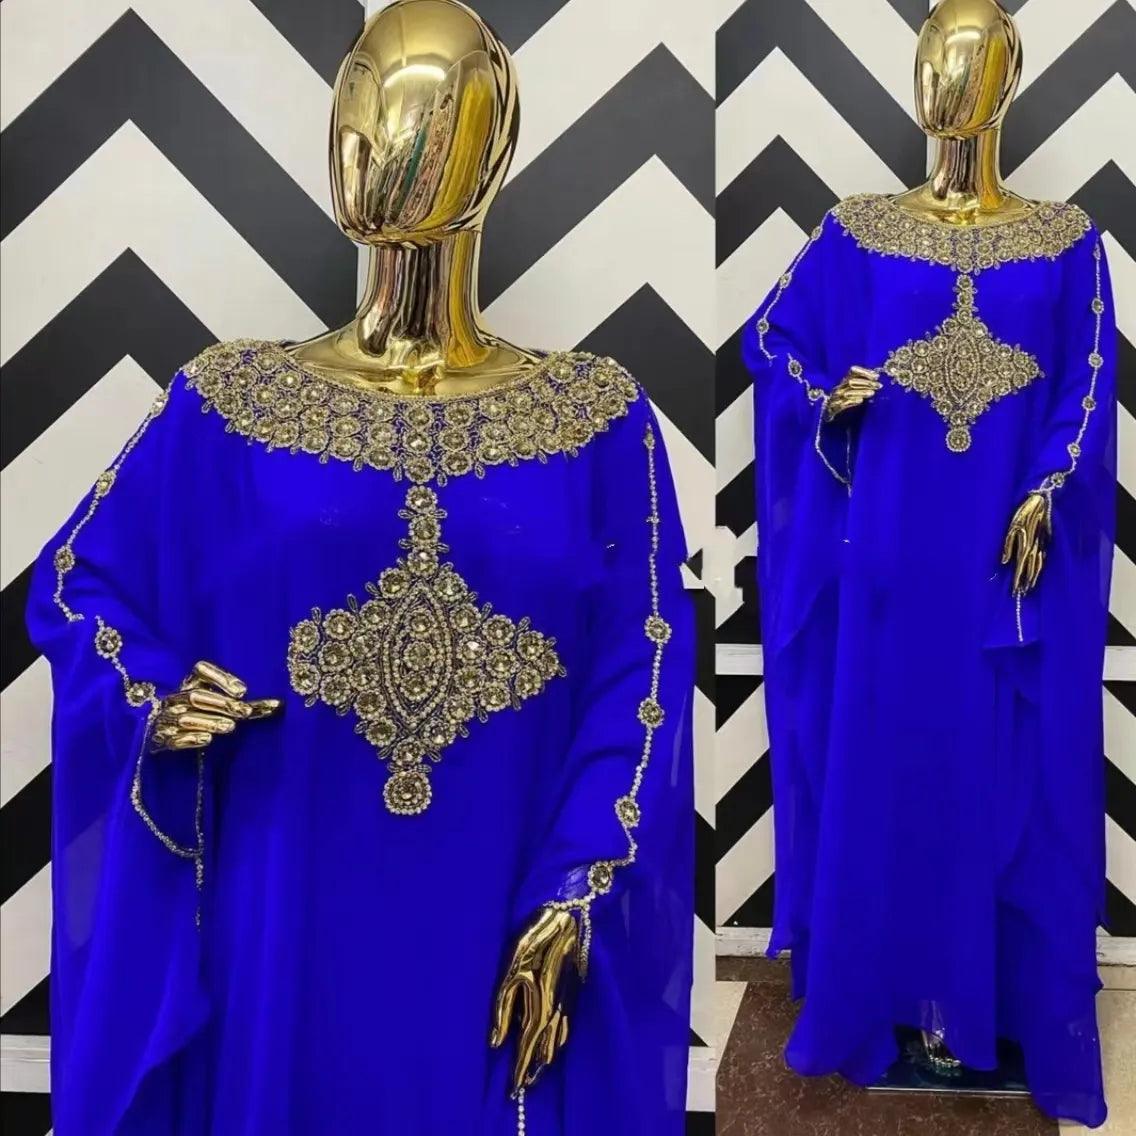 On sale - African Bazin Kaftan Dress - 4 Colours - Free